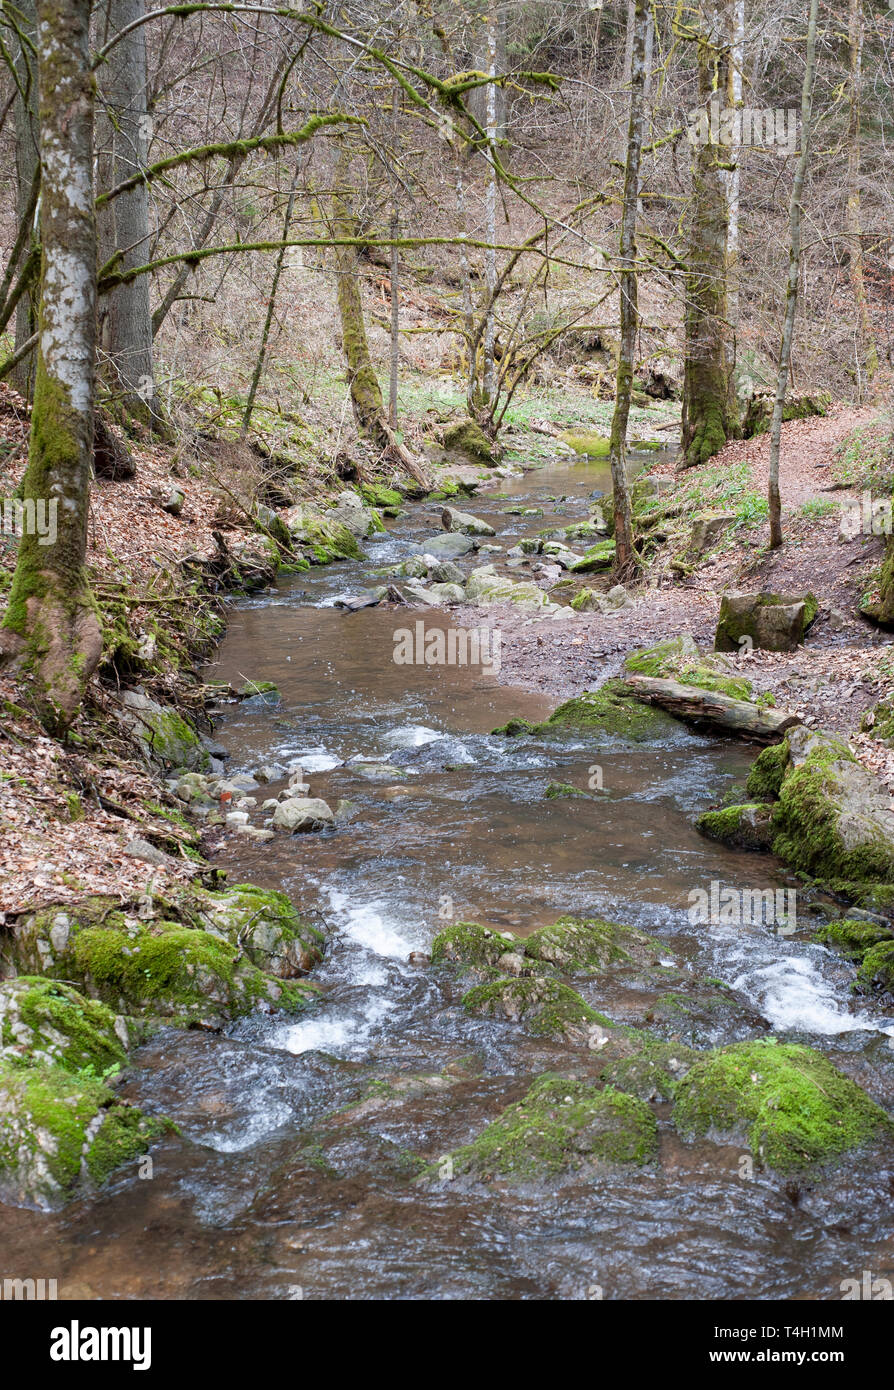 Woodland stream, in early spring, Wutachschlucht Gorge, Black Forest, Germany, Black Forest, Germany Stock Photo